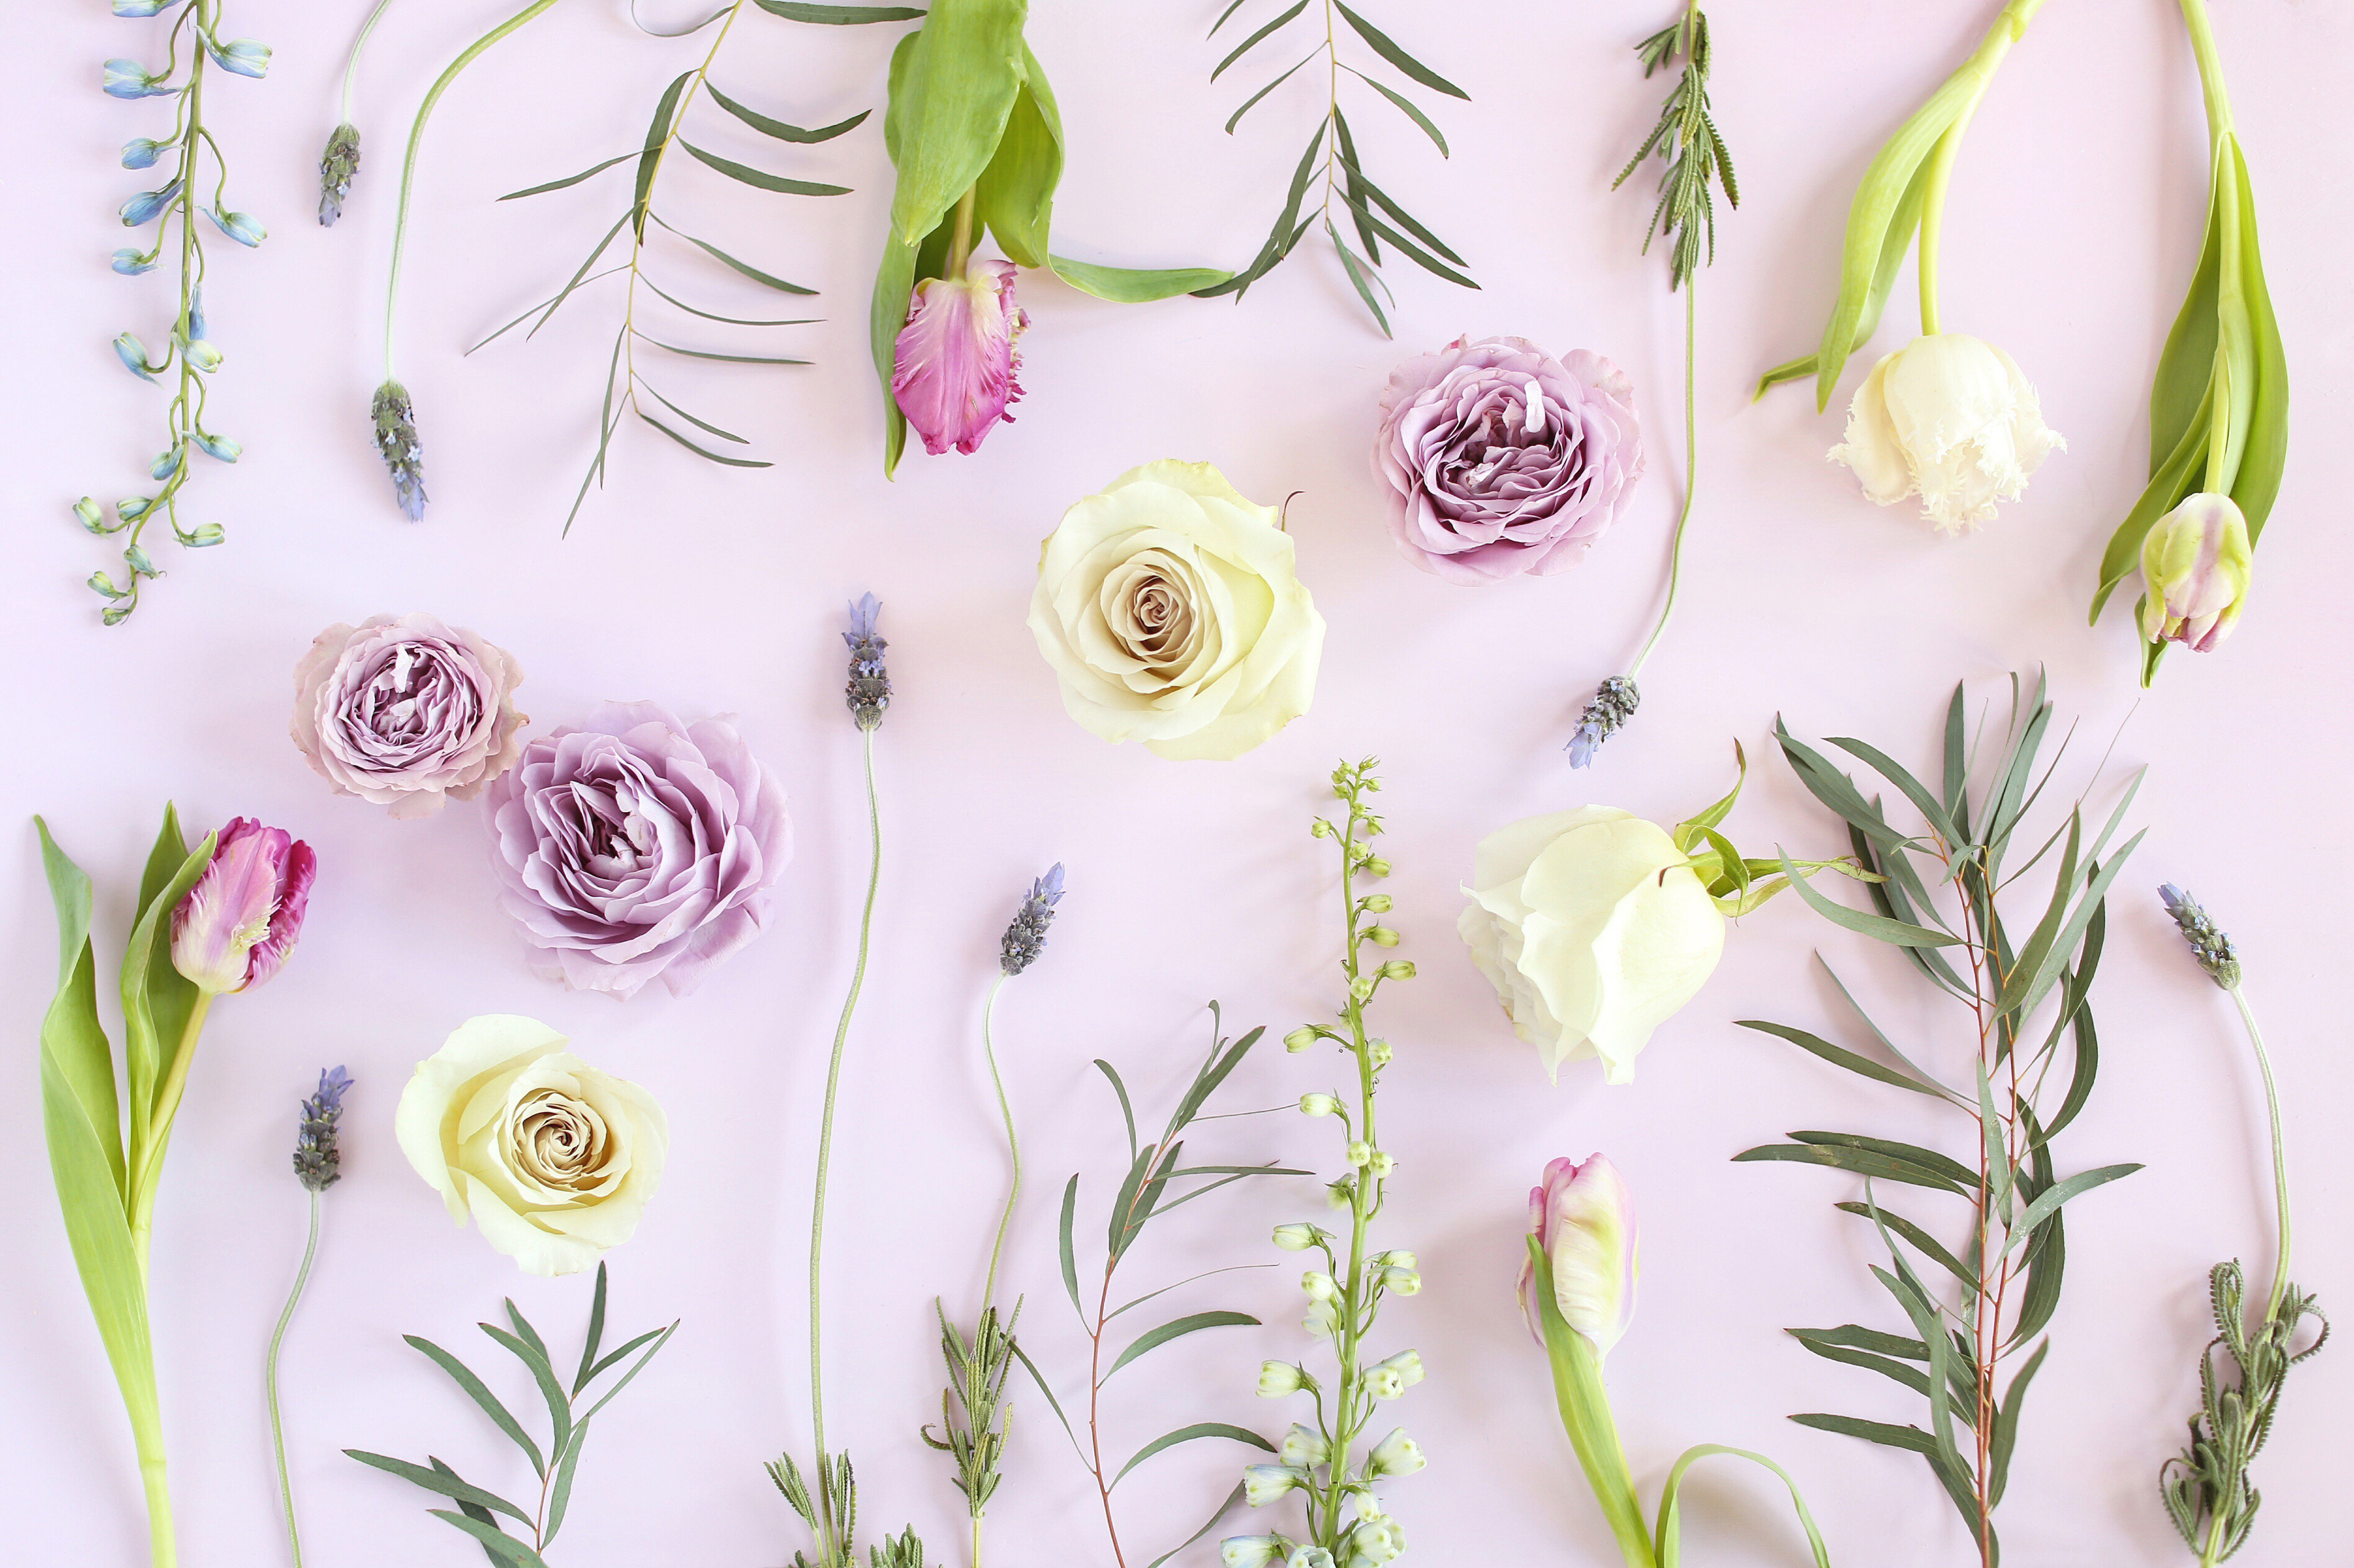 Digital Blooms April 2018 | Free Pantone Inspired Desktop Wallpapers for Spring | Free Lavender Floral Tech Wallpapers | Design 3 // JustineCelina.com x Rebecca Dawn Design